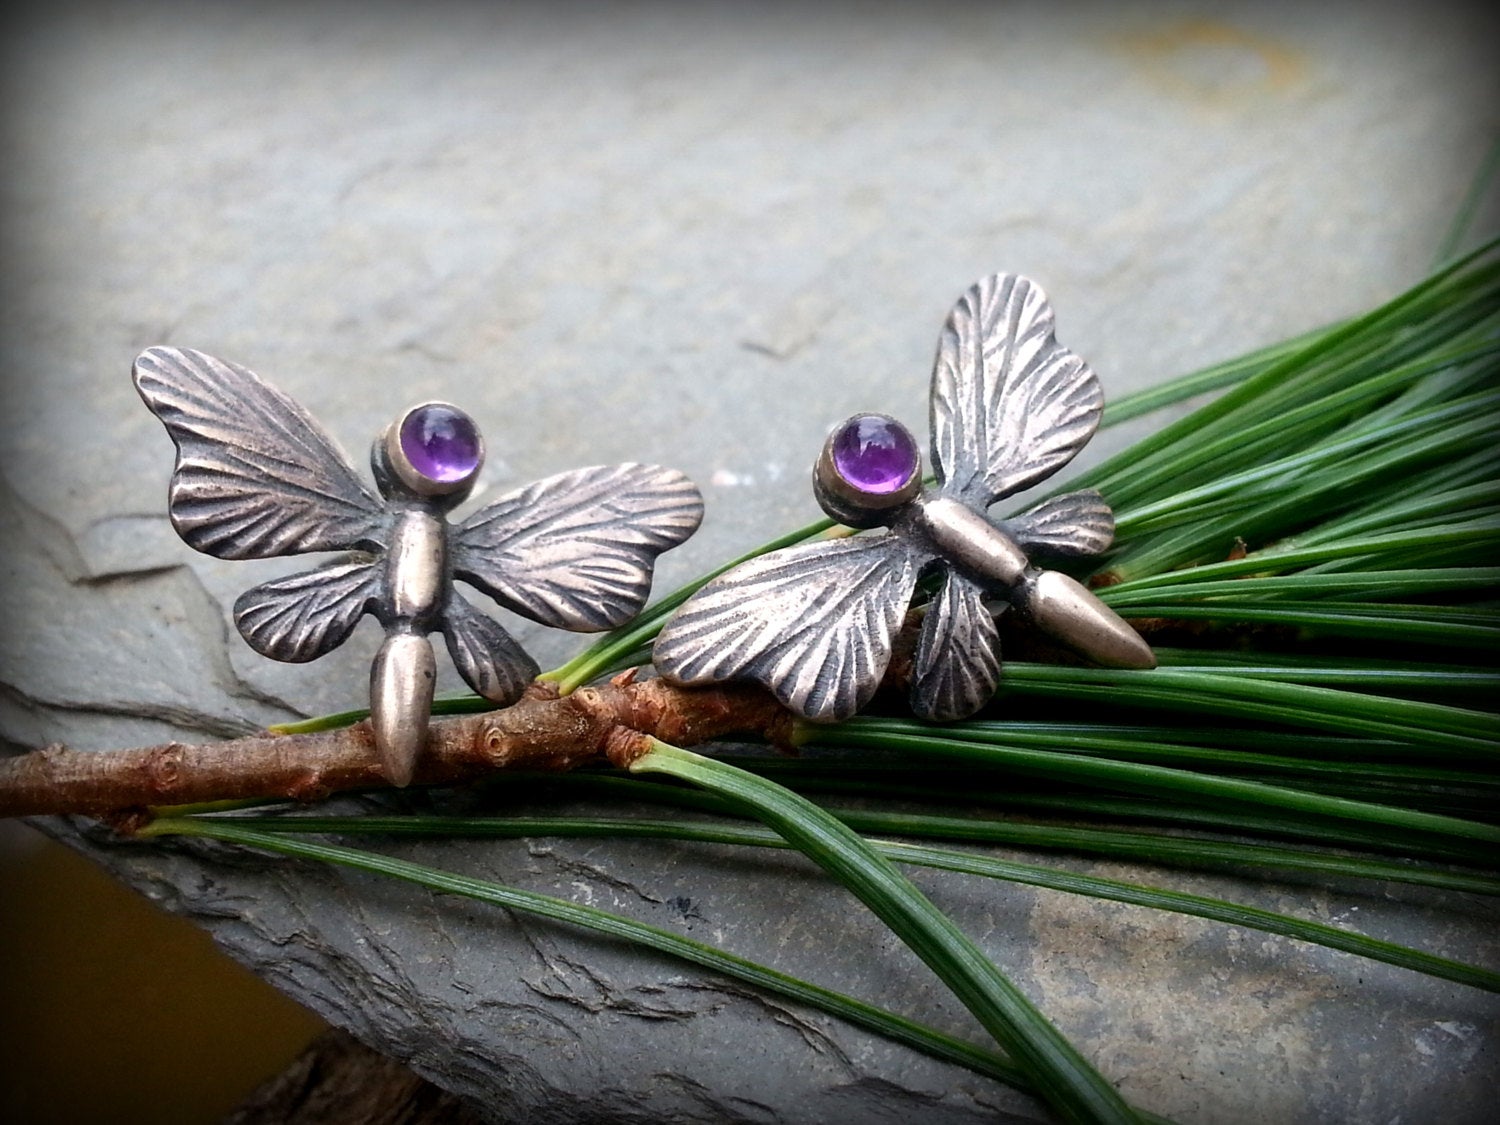 Mariposa Butterfly Post Earrings, with Gemstone